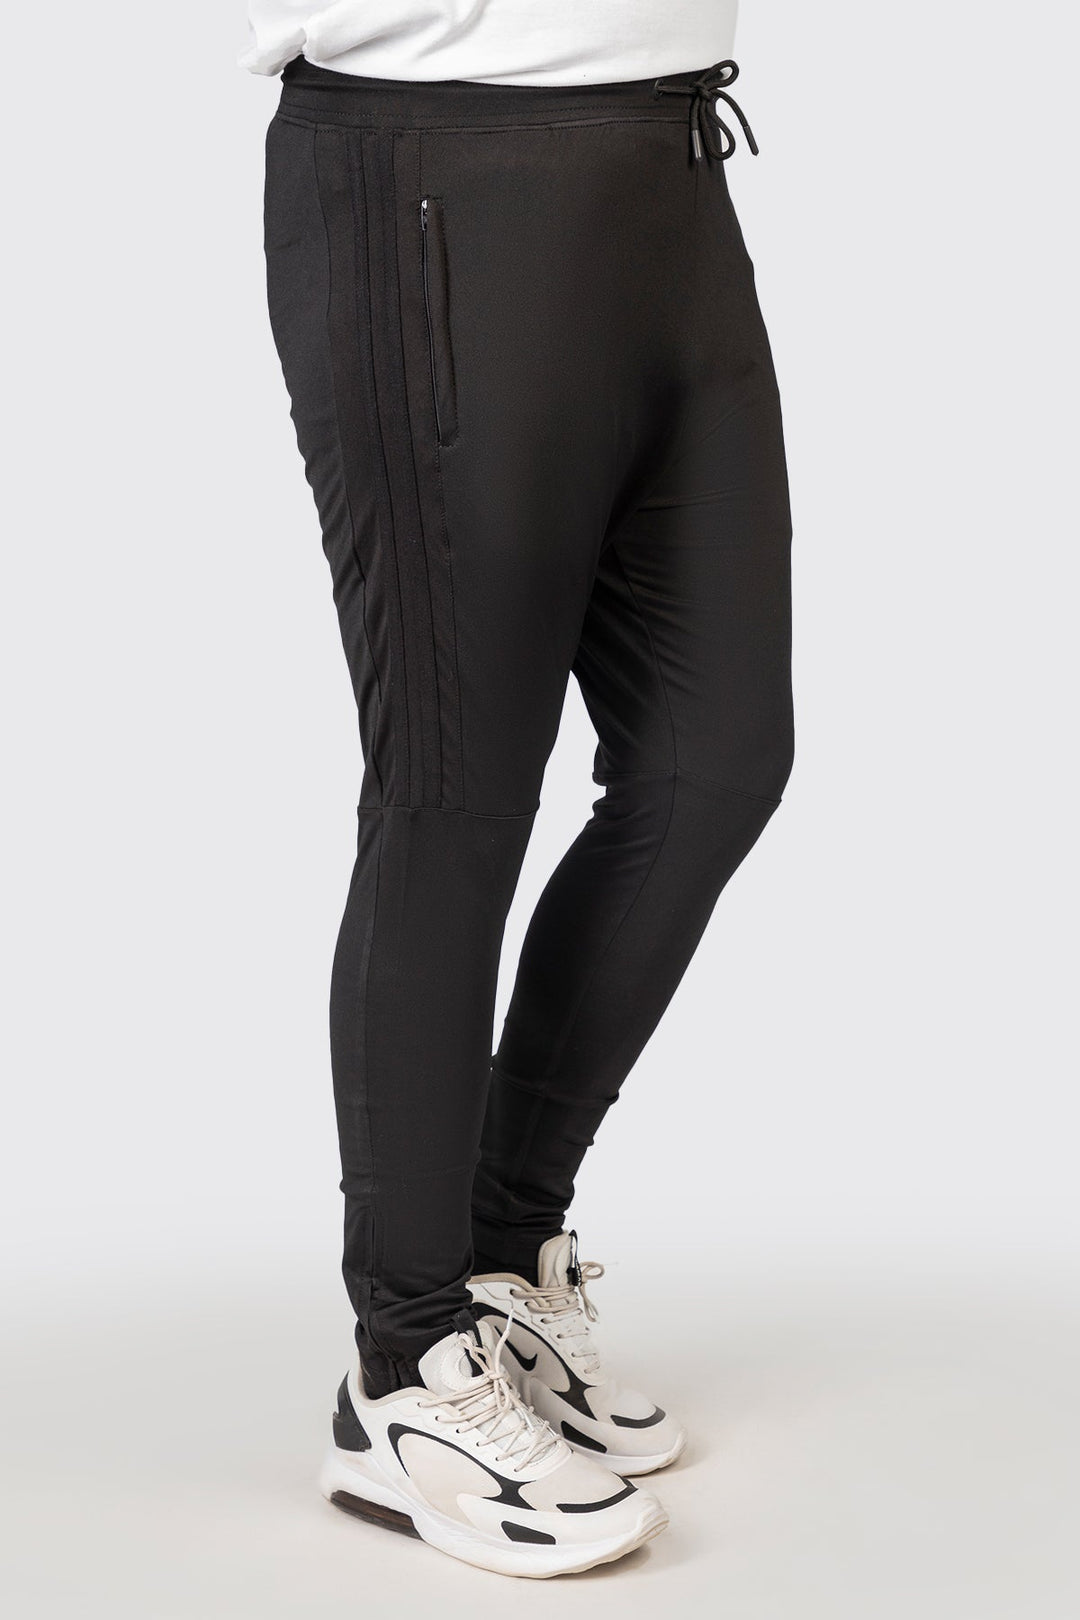 Go Sporty Black Polyester Tracksuit (Plus Size) - W23 - MHC009P